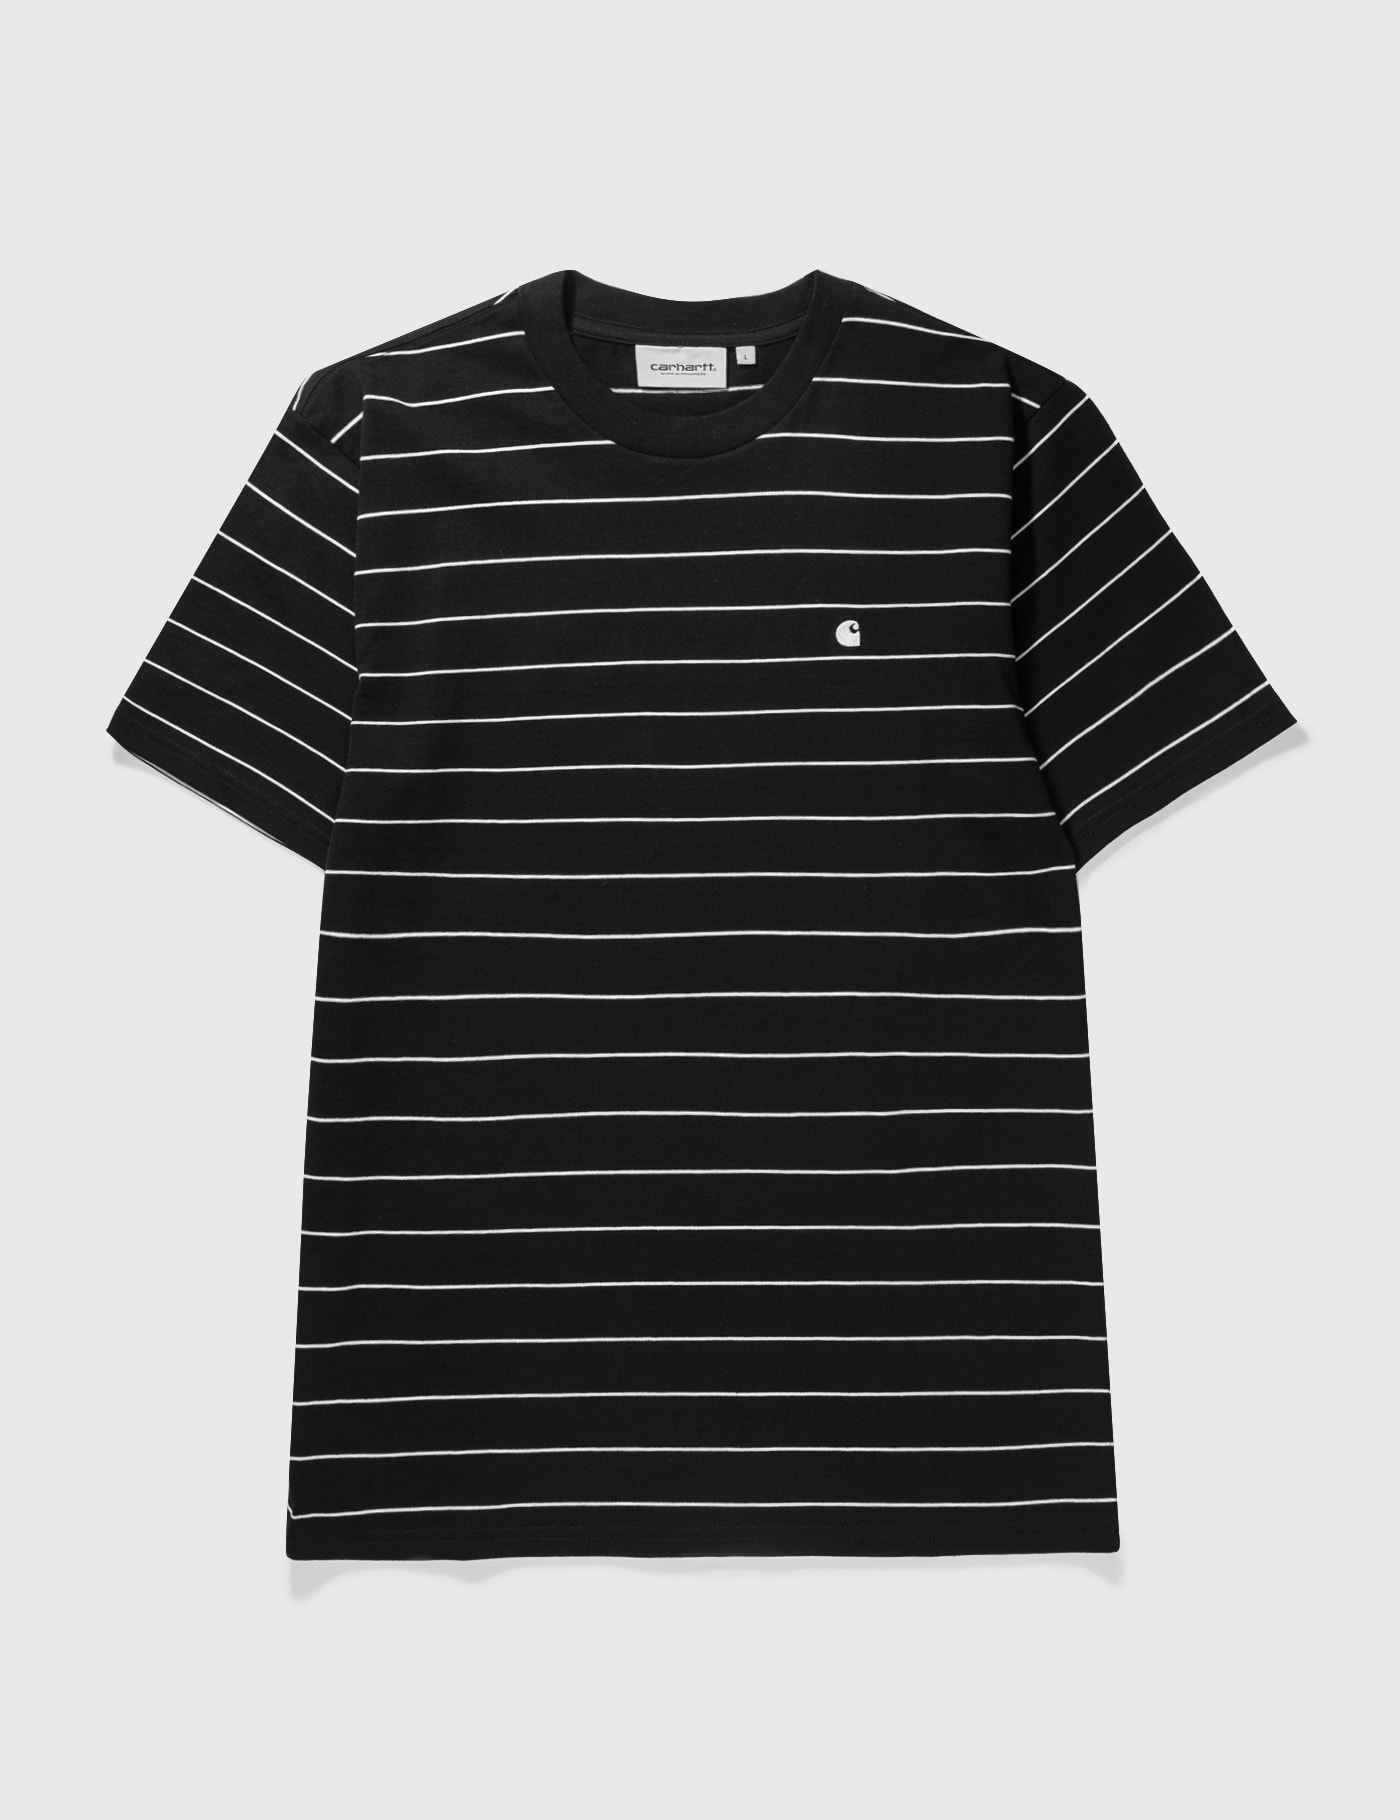 Carhartt S/s Denton T-shirt In Denton Stipe/black/wax